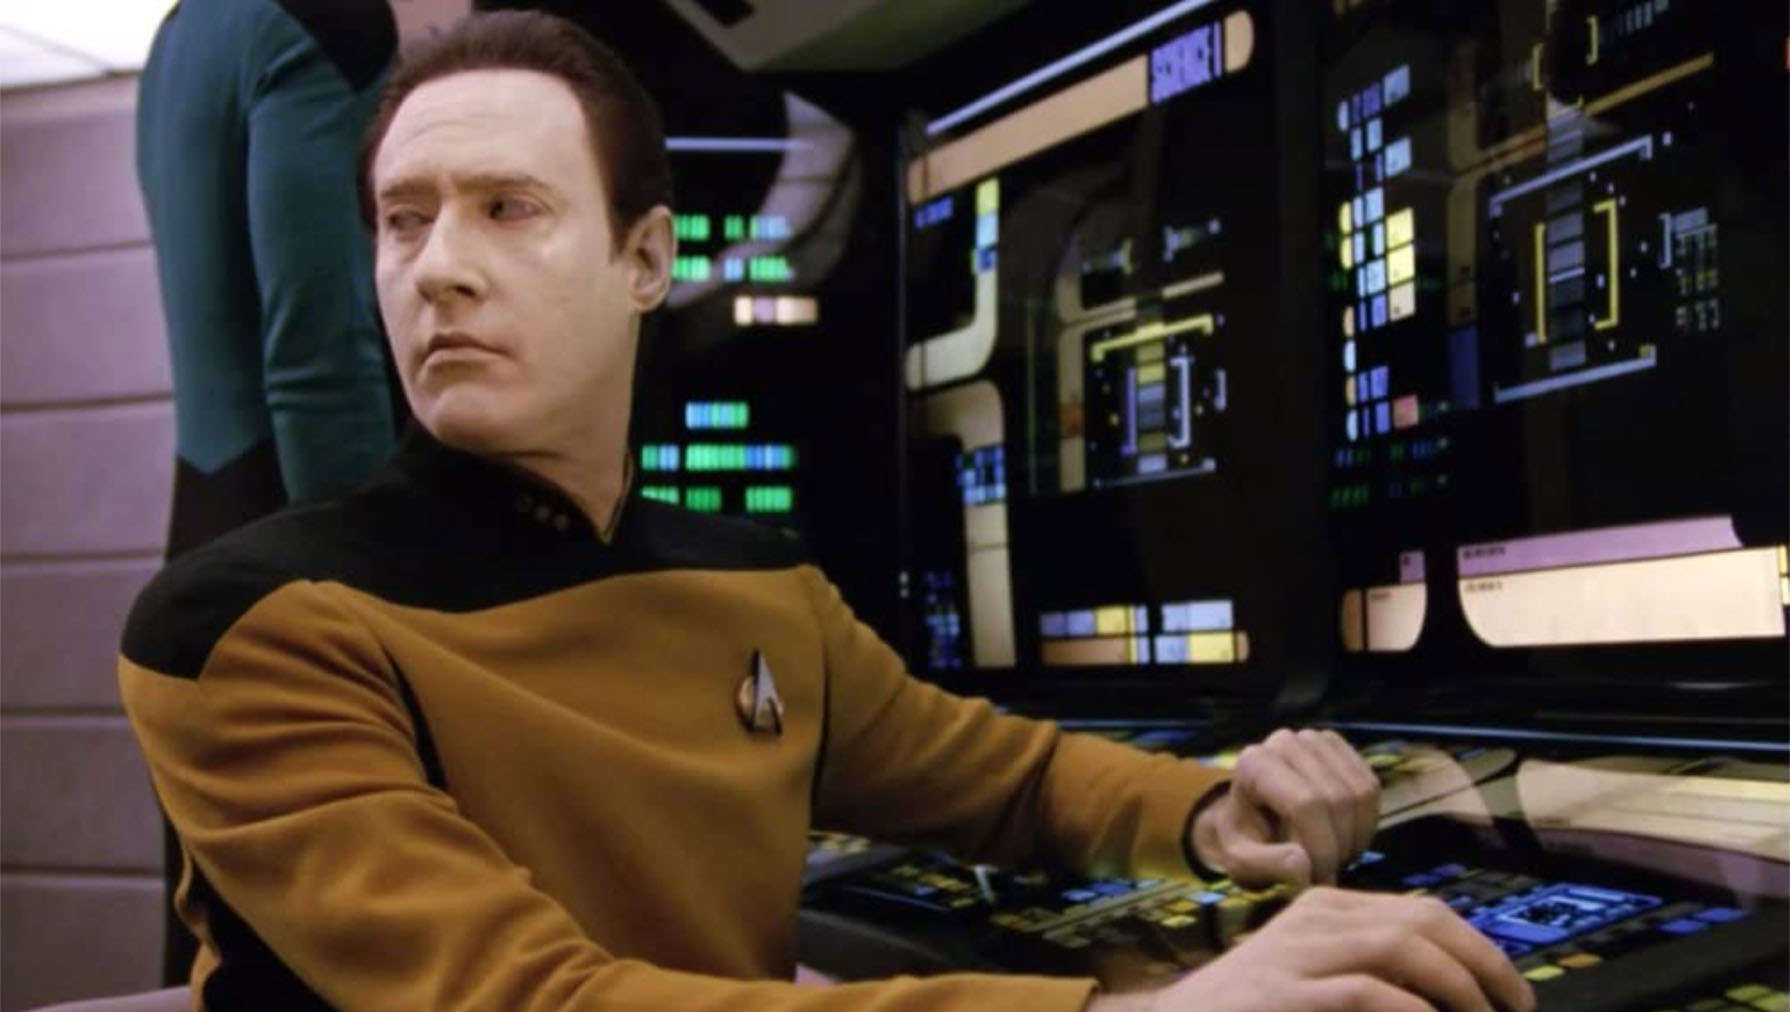 Data from Star Trek: The Next Generation 